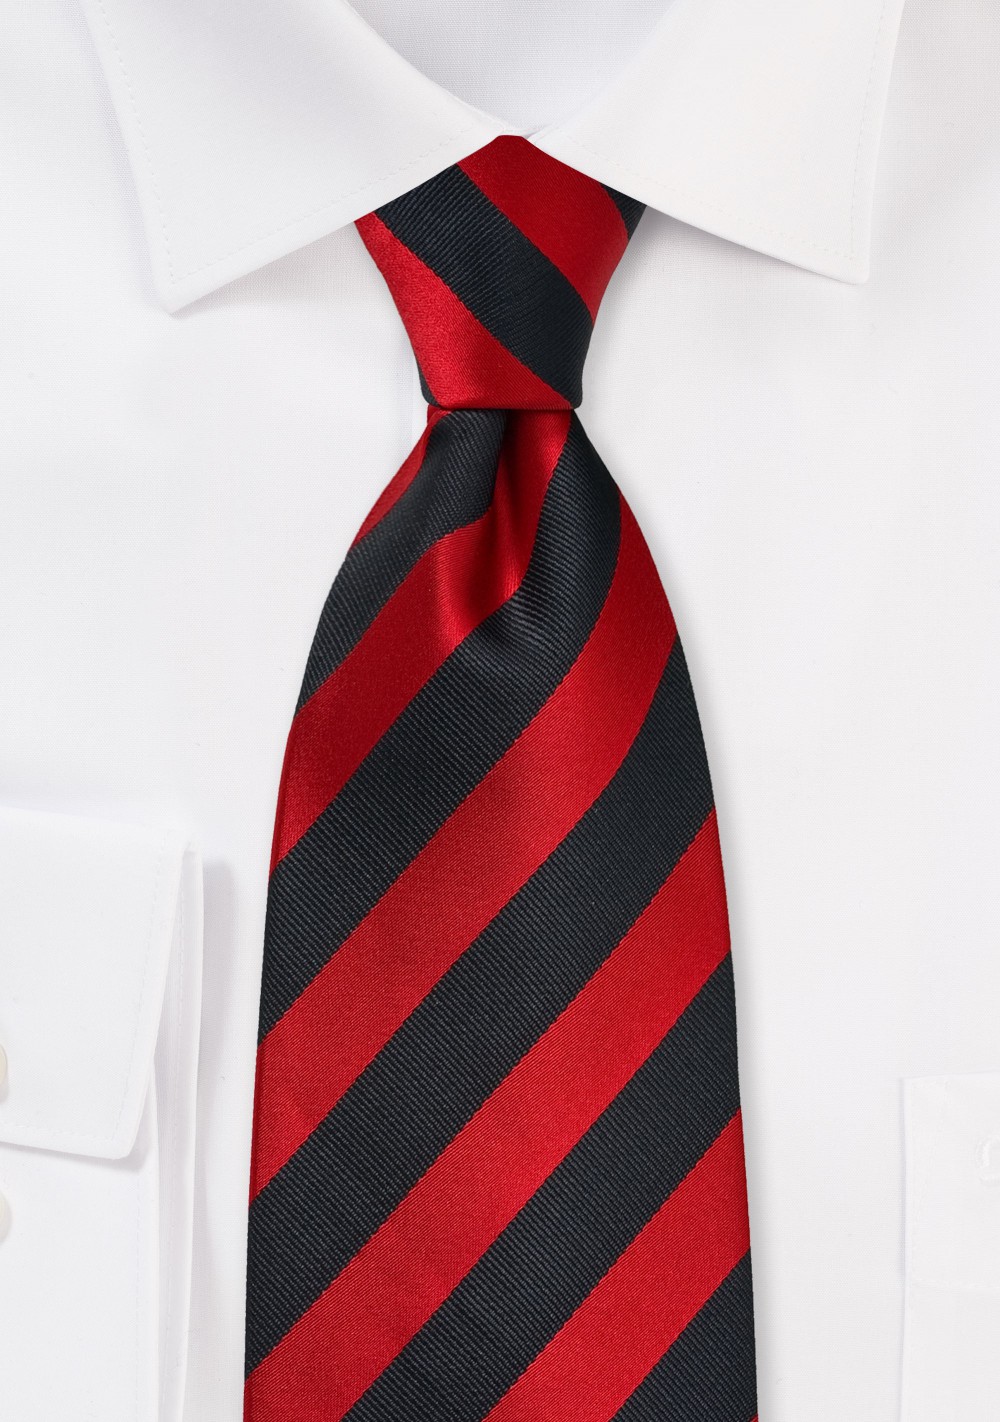 Deep Red and Black Tie in XL Length | Bows-N-Ties.com